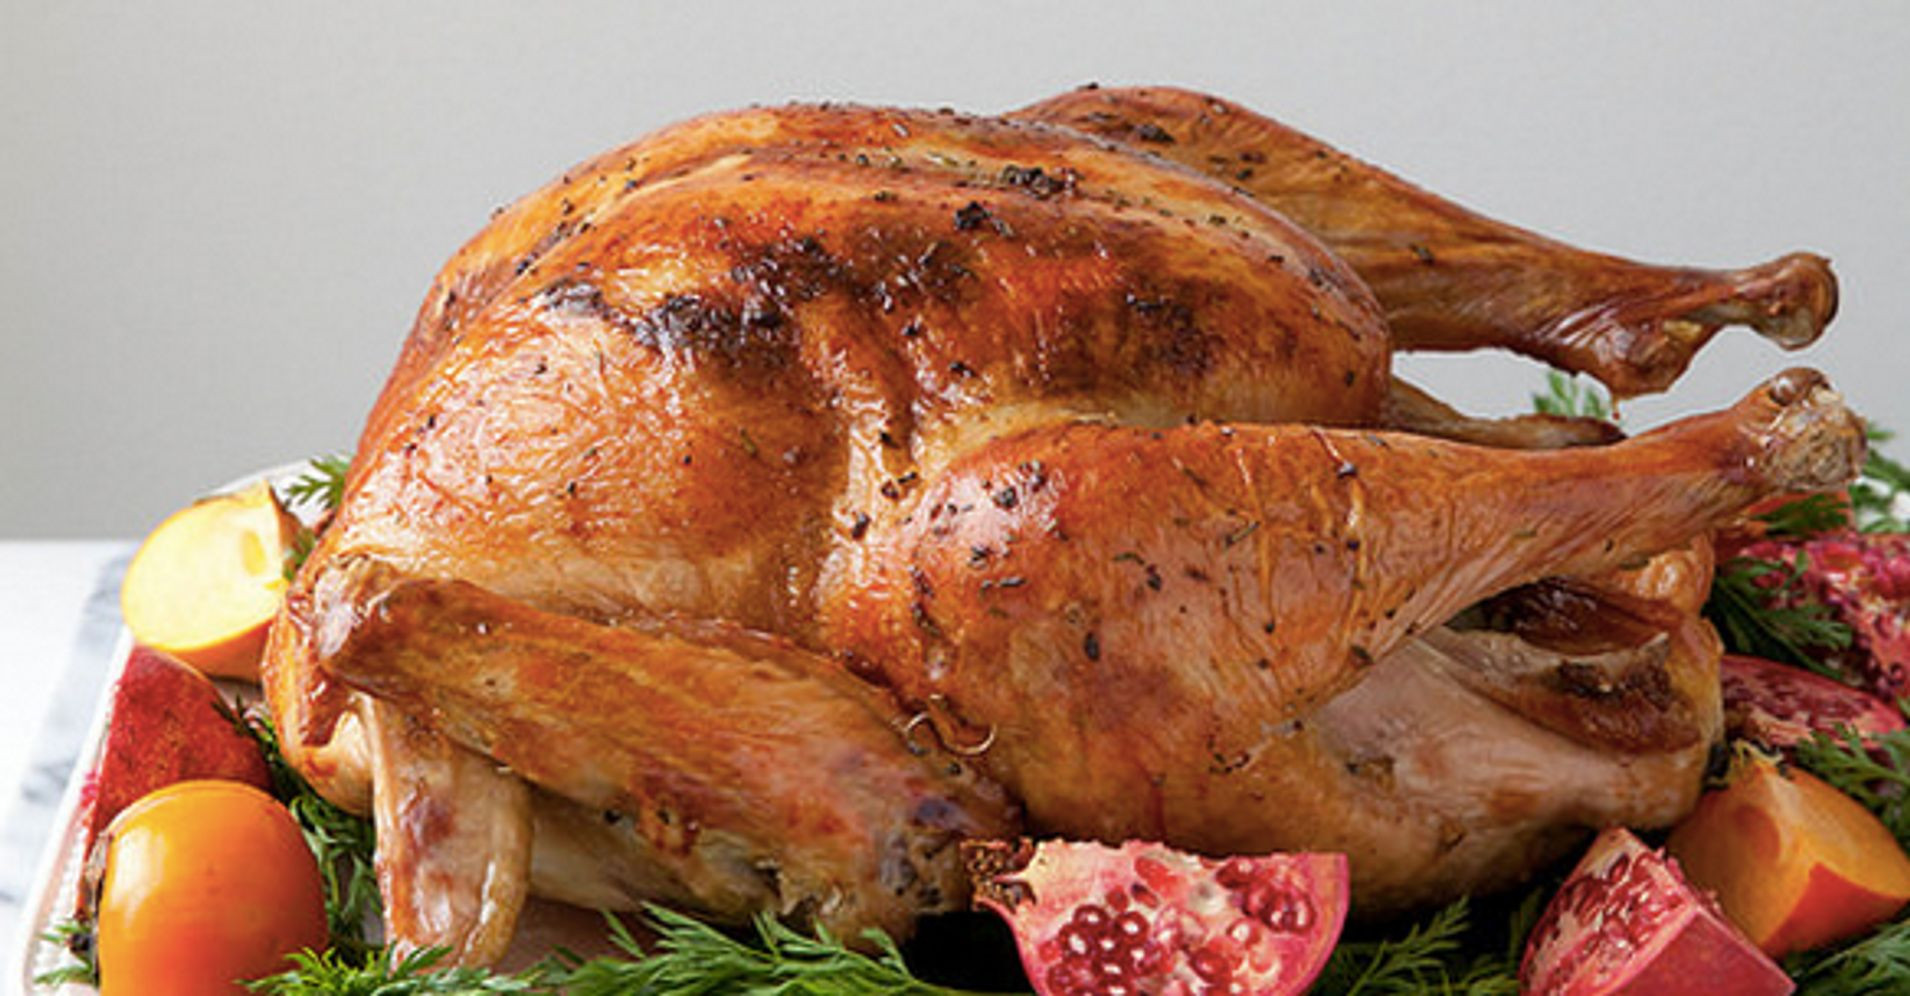 Best Turkey Recipes Thanksgiving
 The Best Turkey Recipes For Thanksgiving